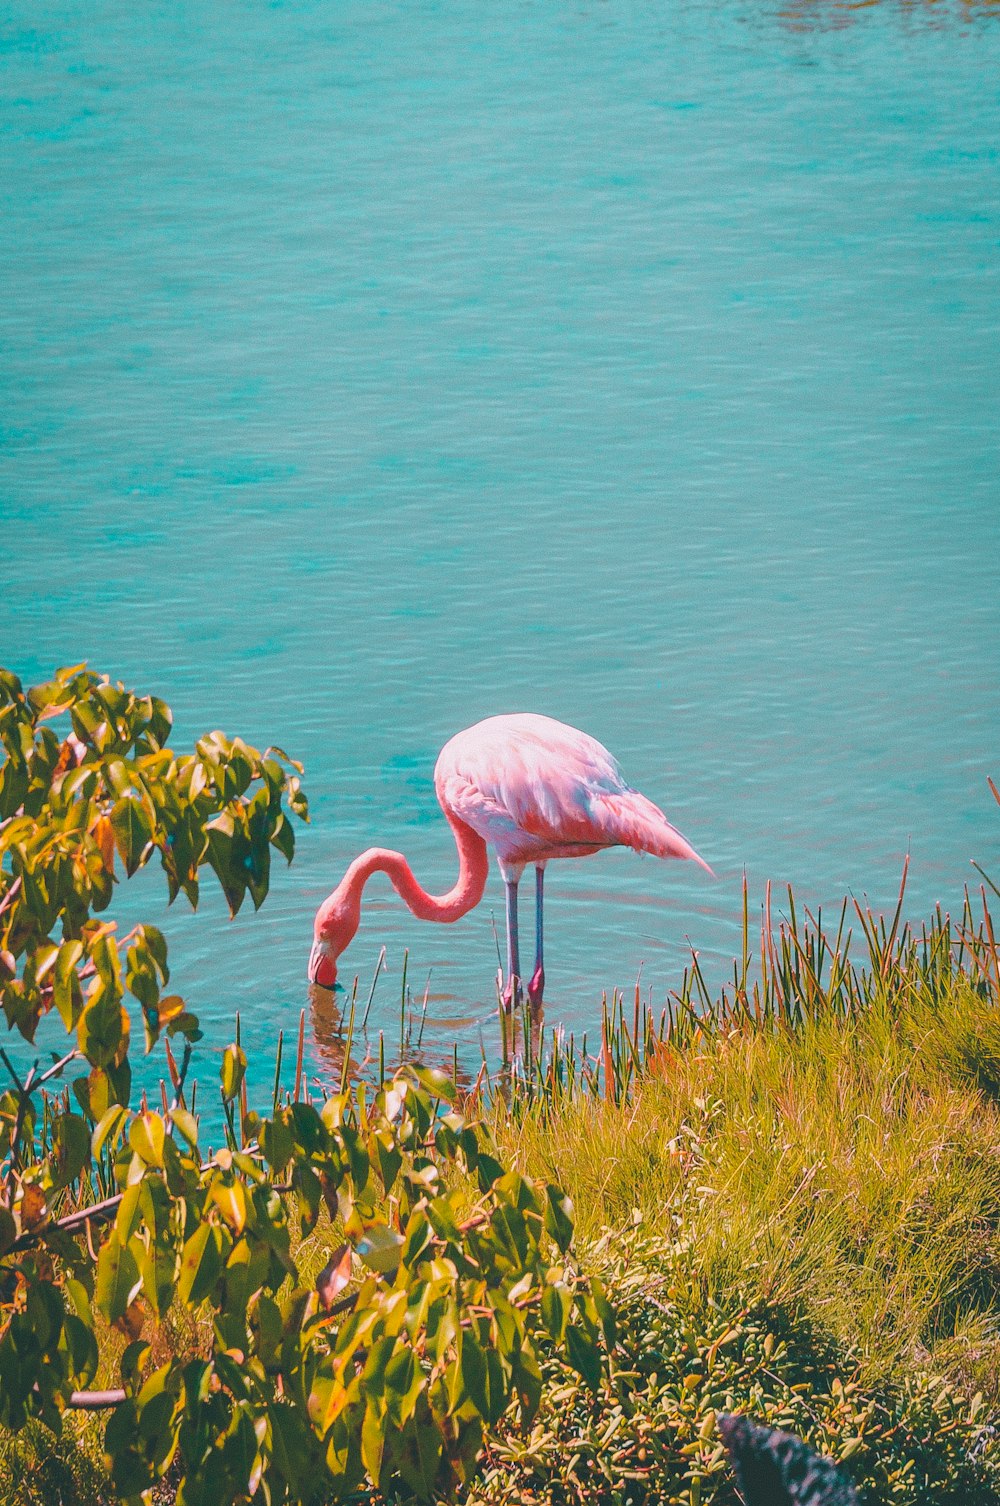 Rosa Flamingo in der Nähe von Grasfeld